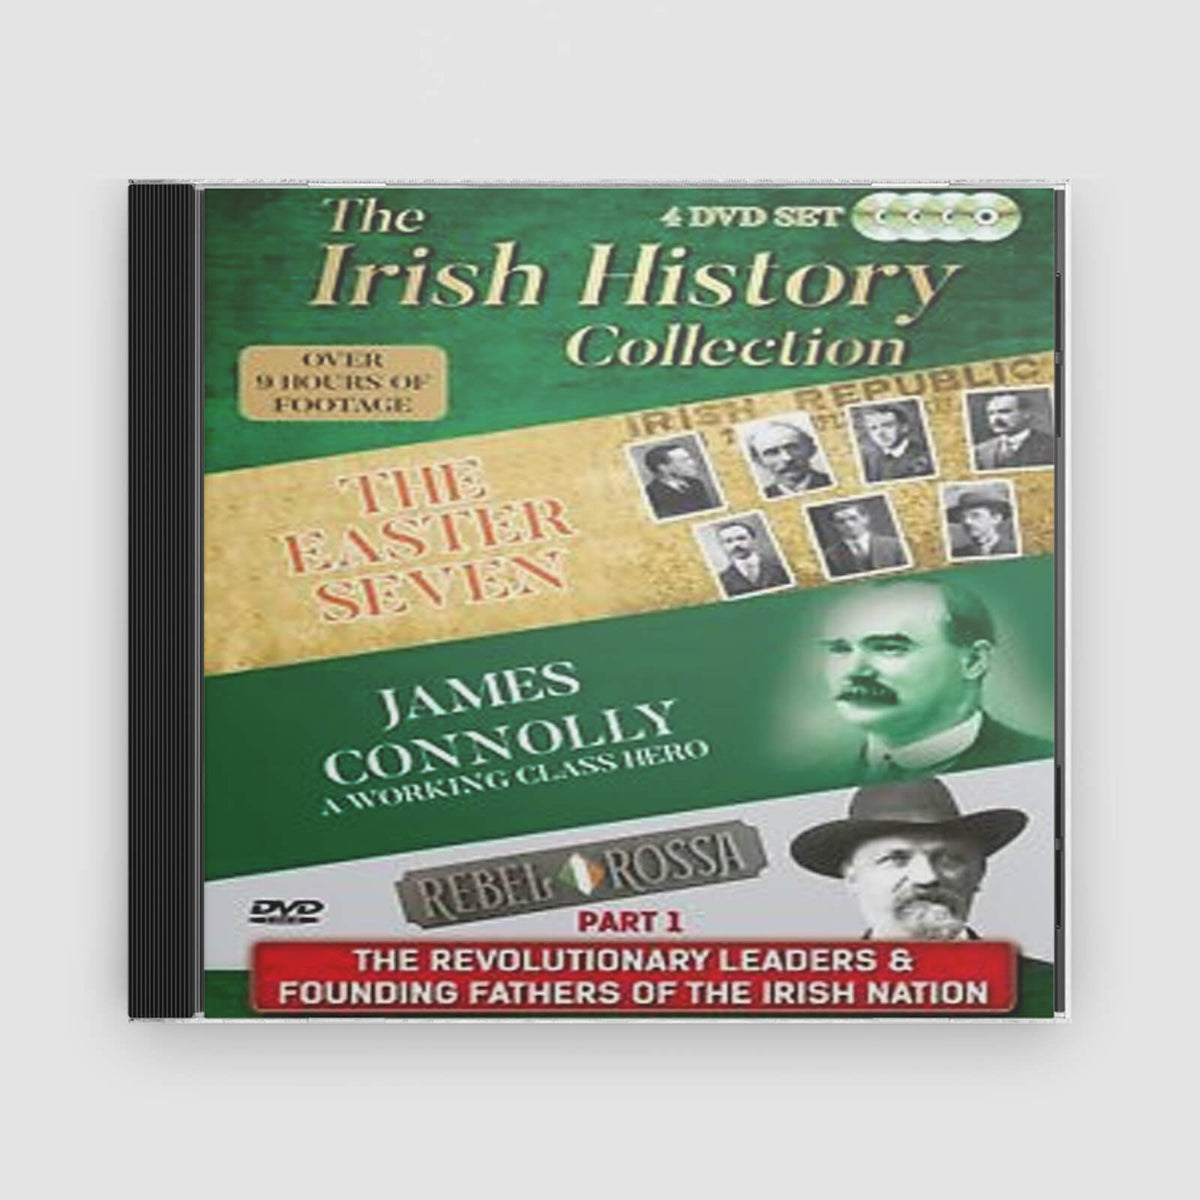 The Irish History Collection DVD